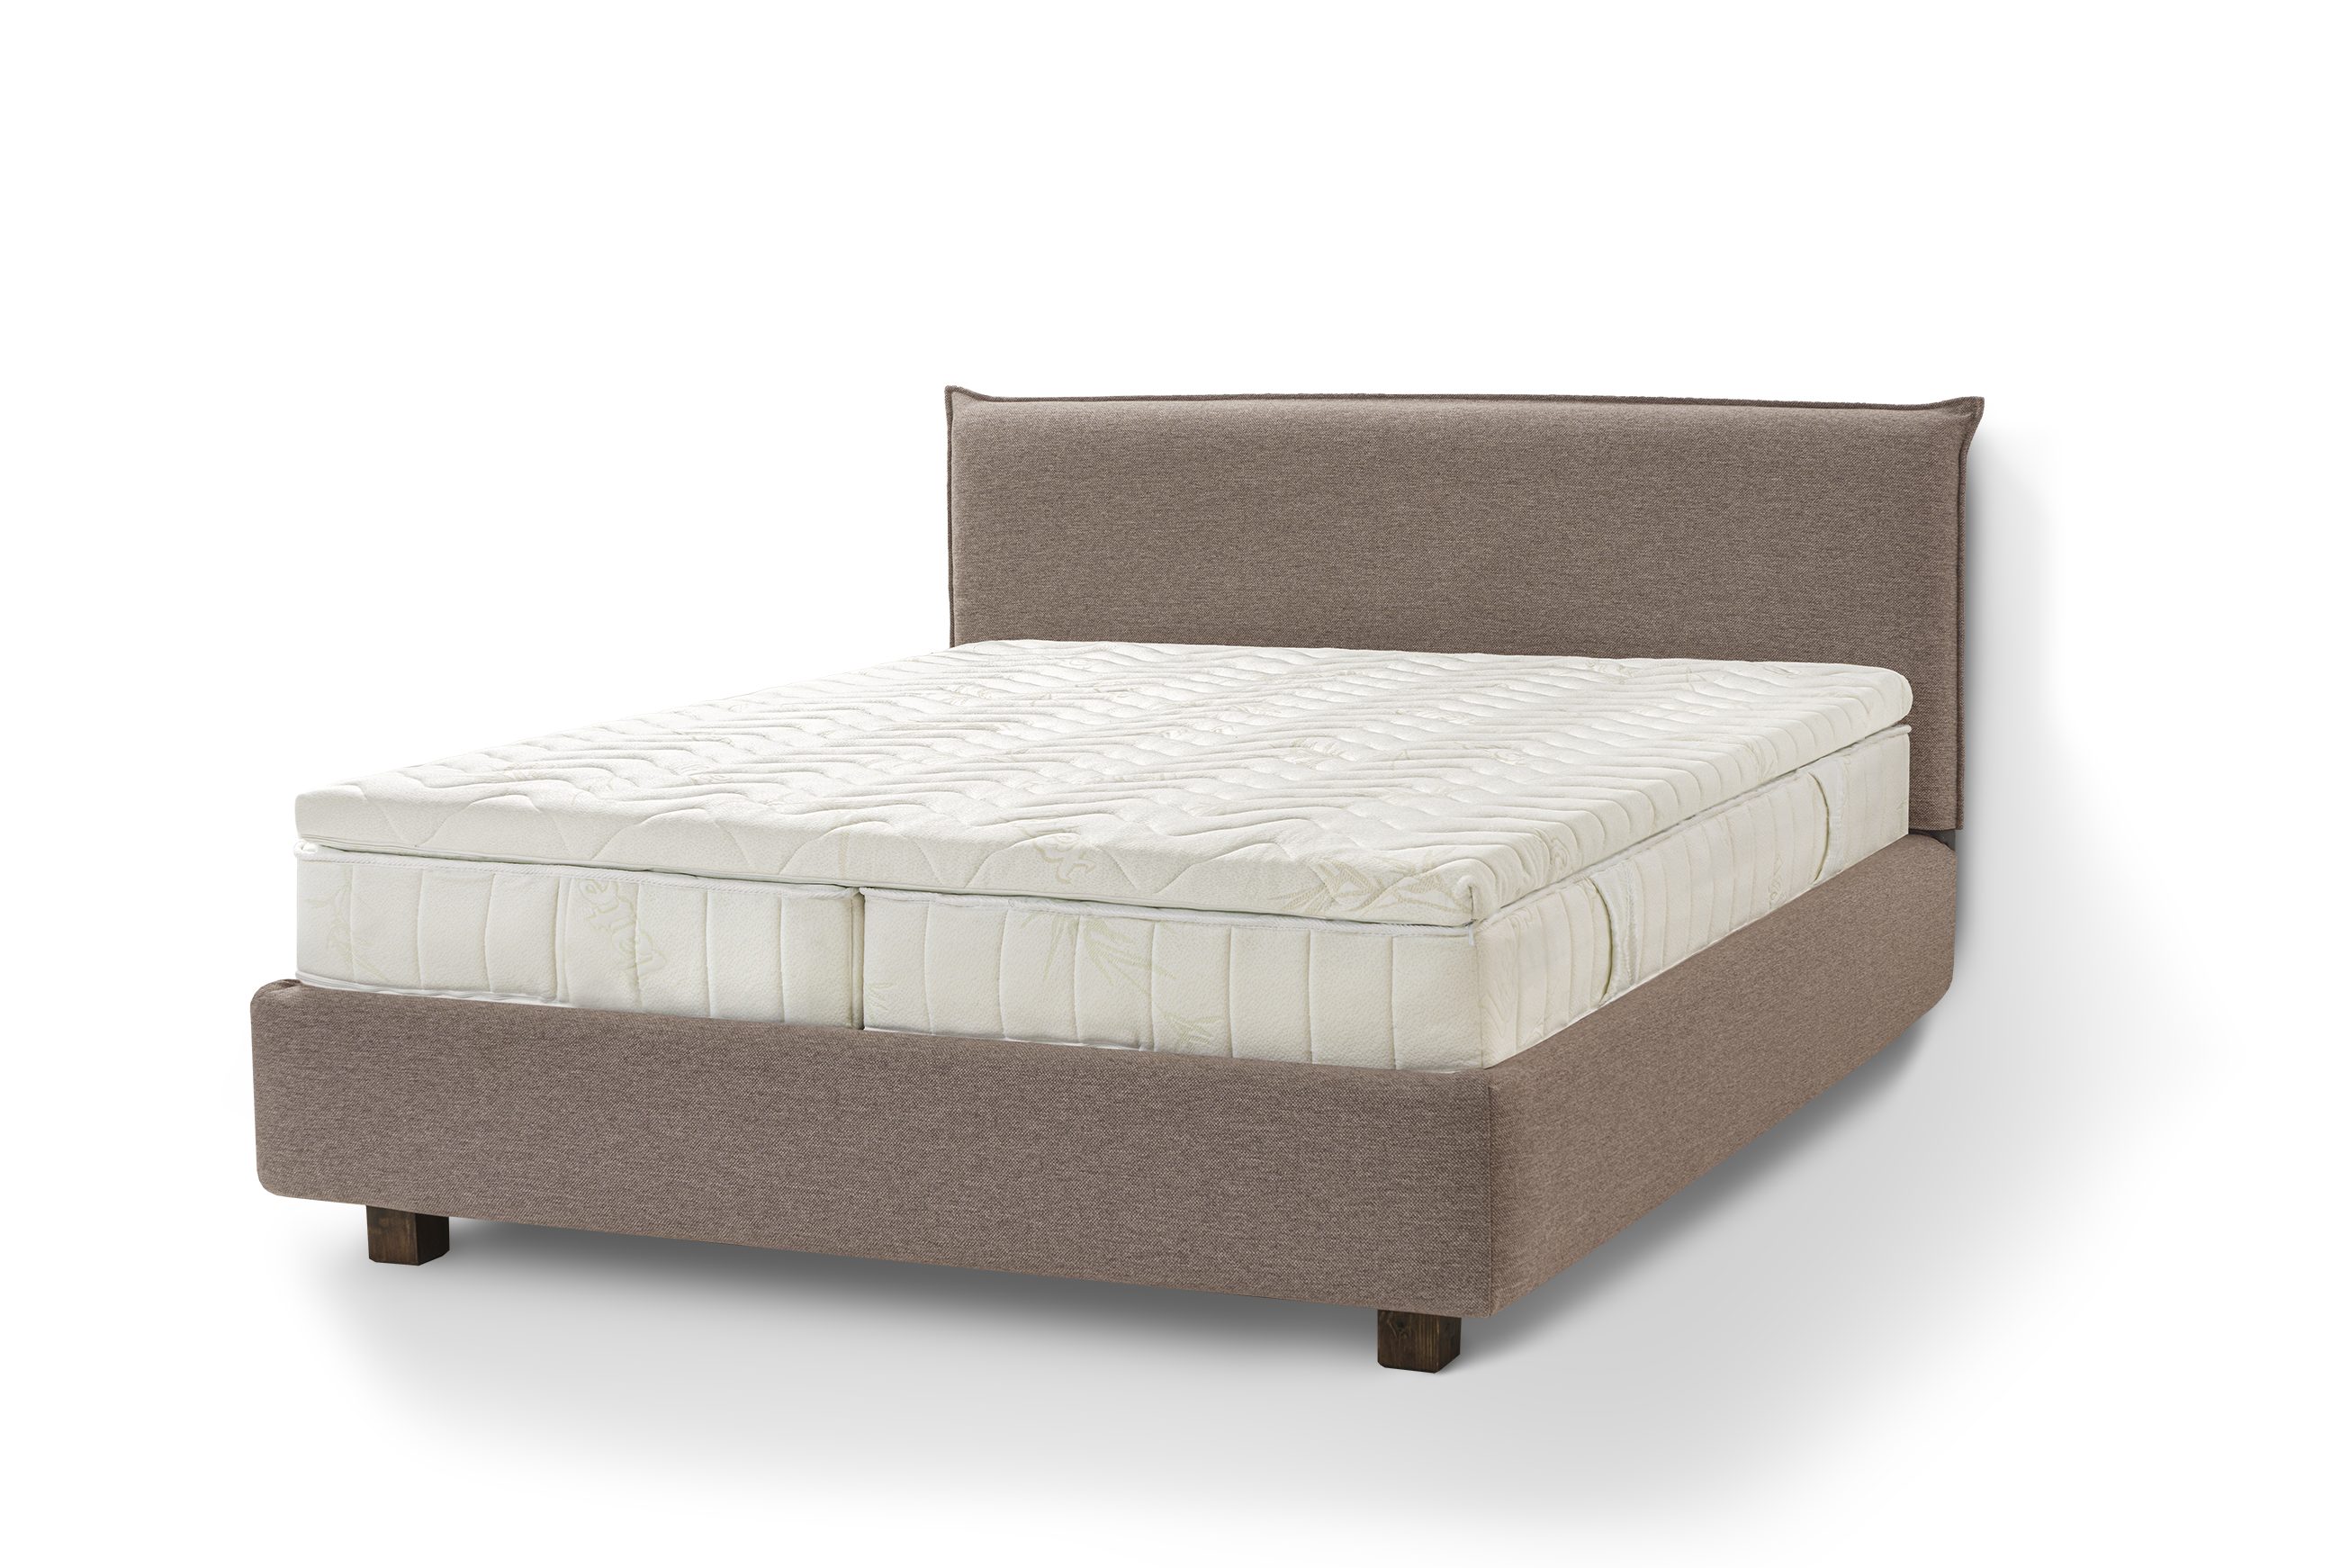 Letti Moderni Holzbett Bett Puro, hergestellt aus hochwertigem Massivholz Siena Brown